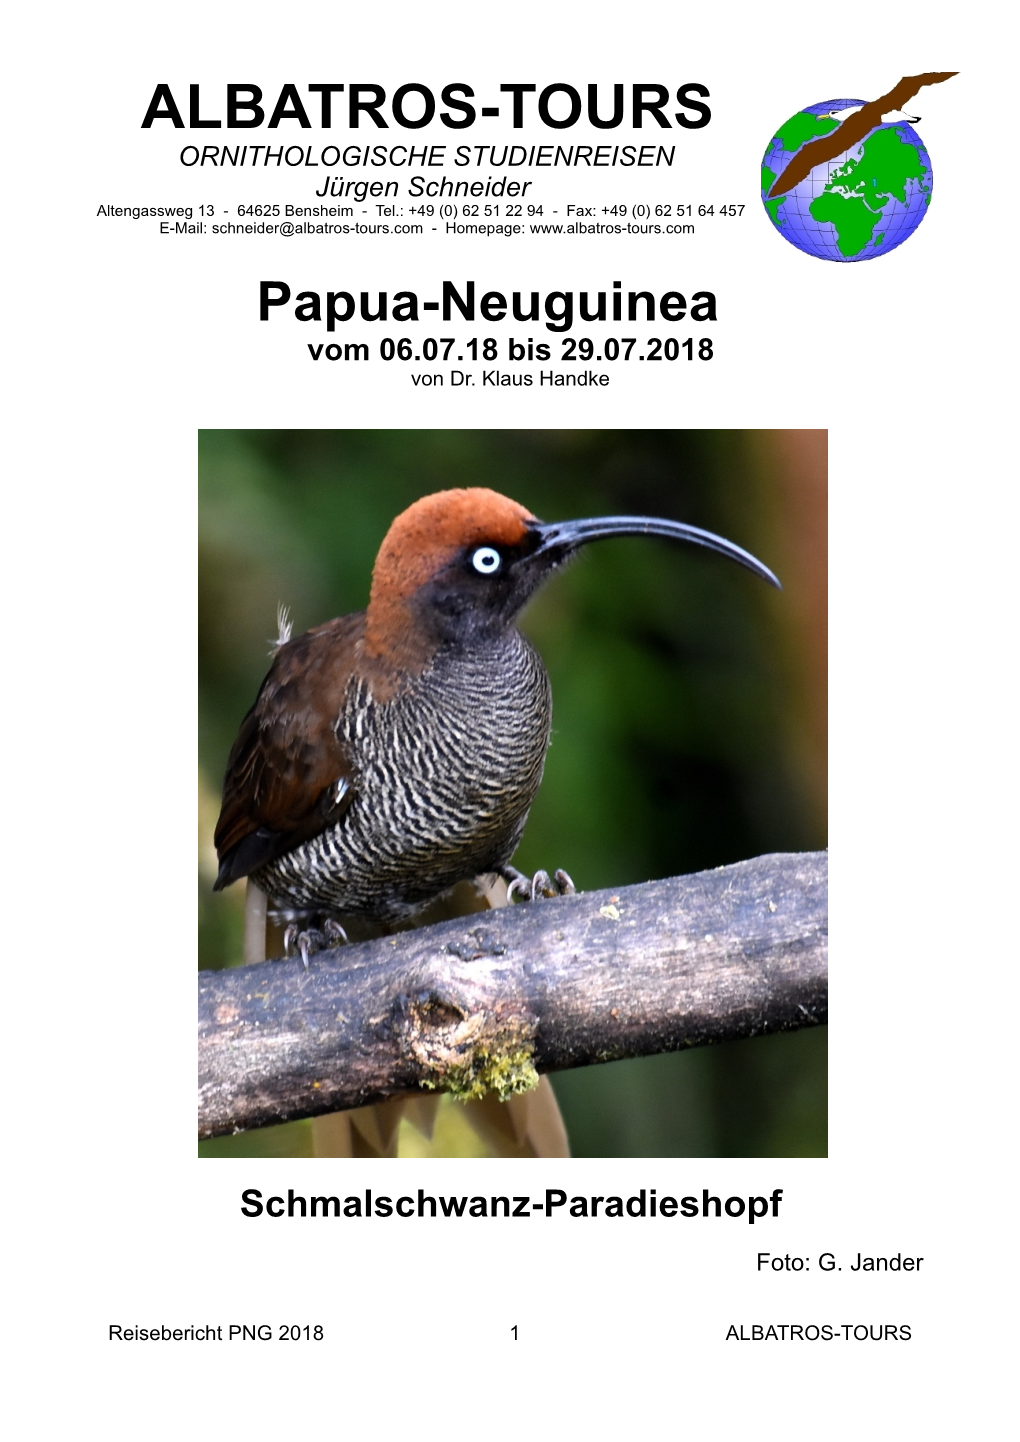 Papua-Neu-Guinea Im Juli 2018 K. Handke